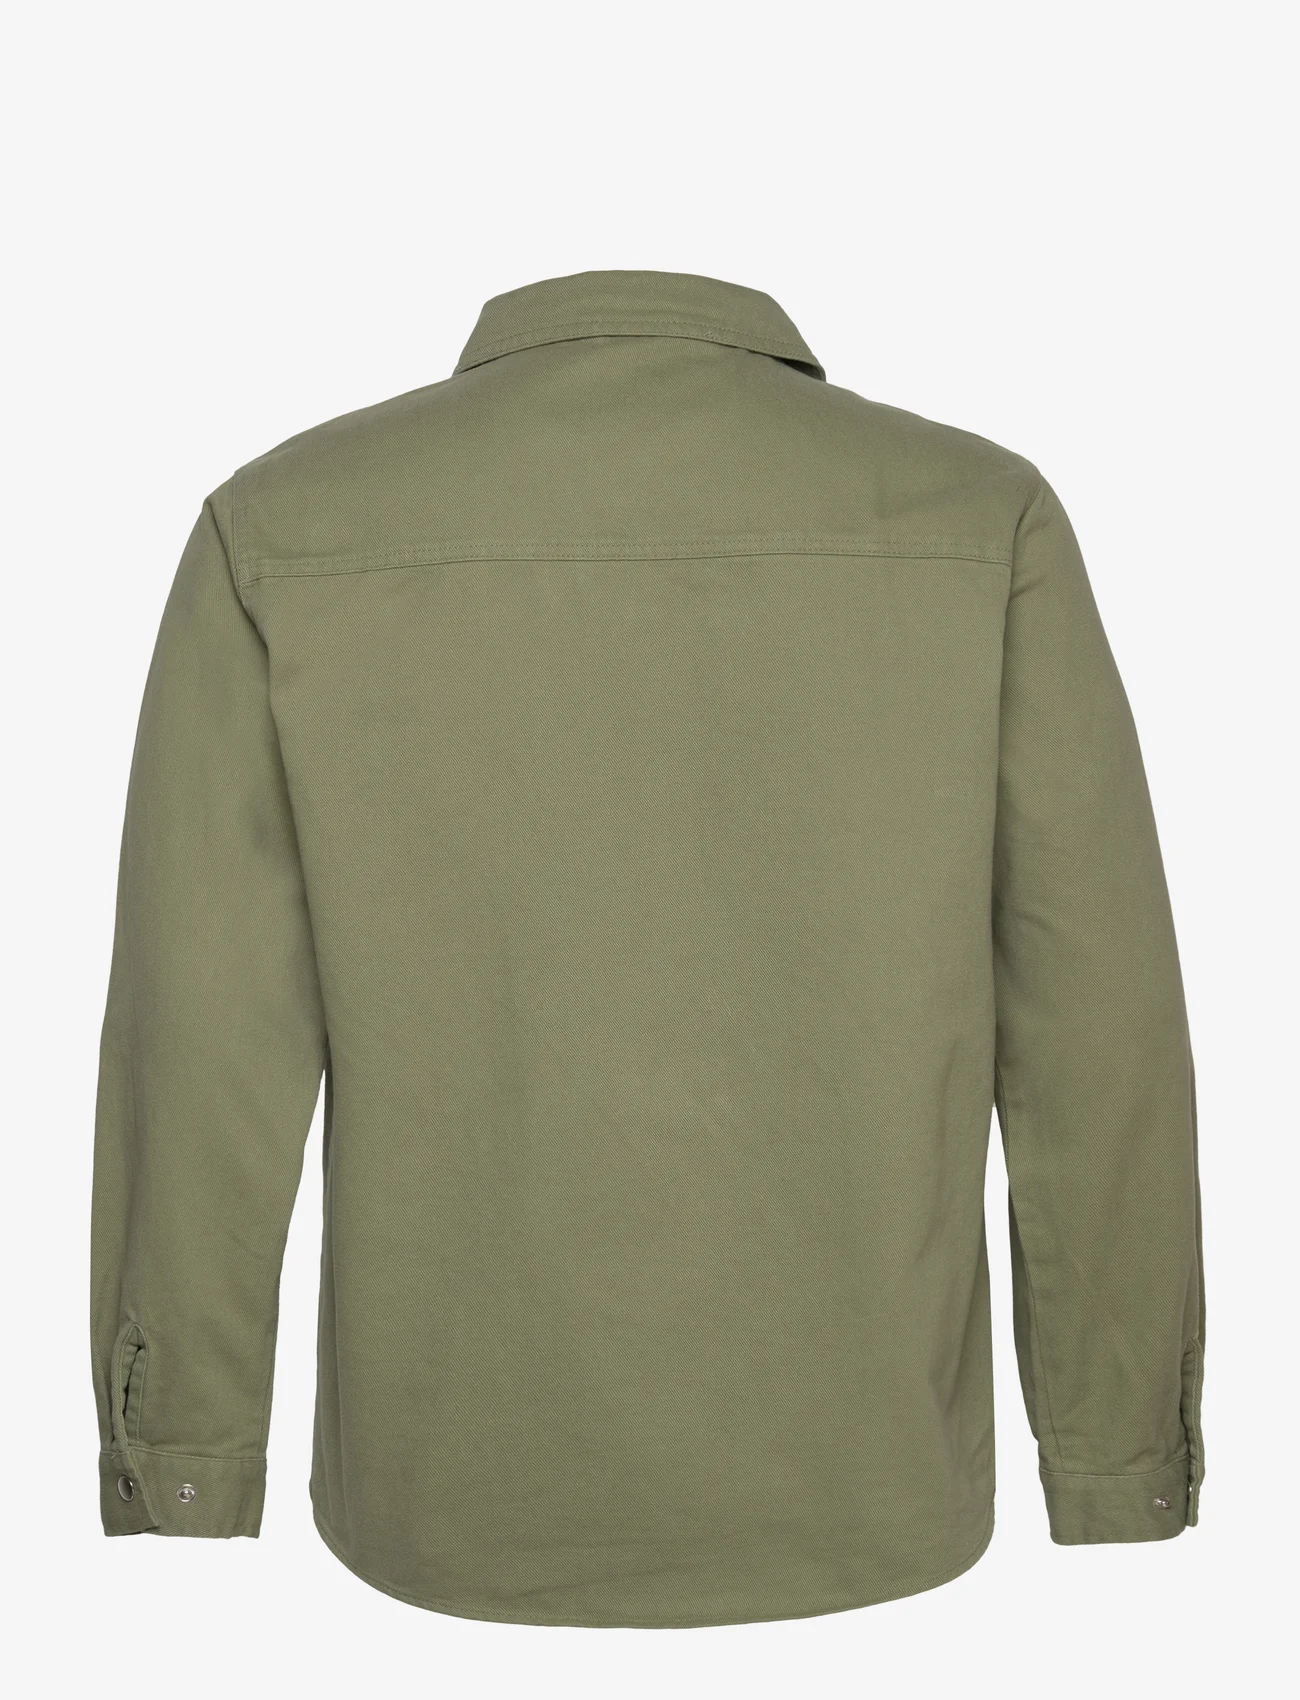 Revolution - Overshirt Zip - men - lightgreen - 1